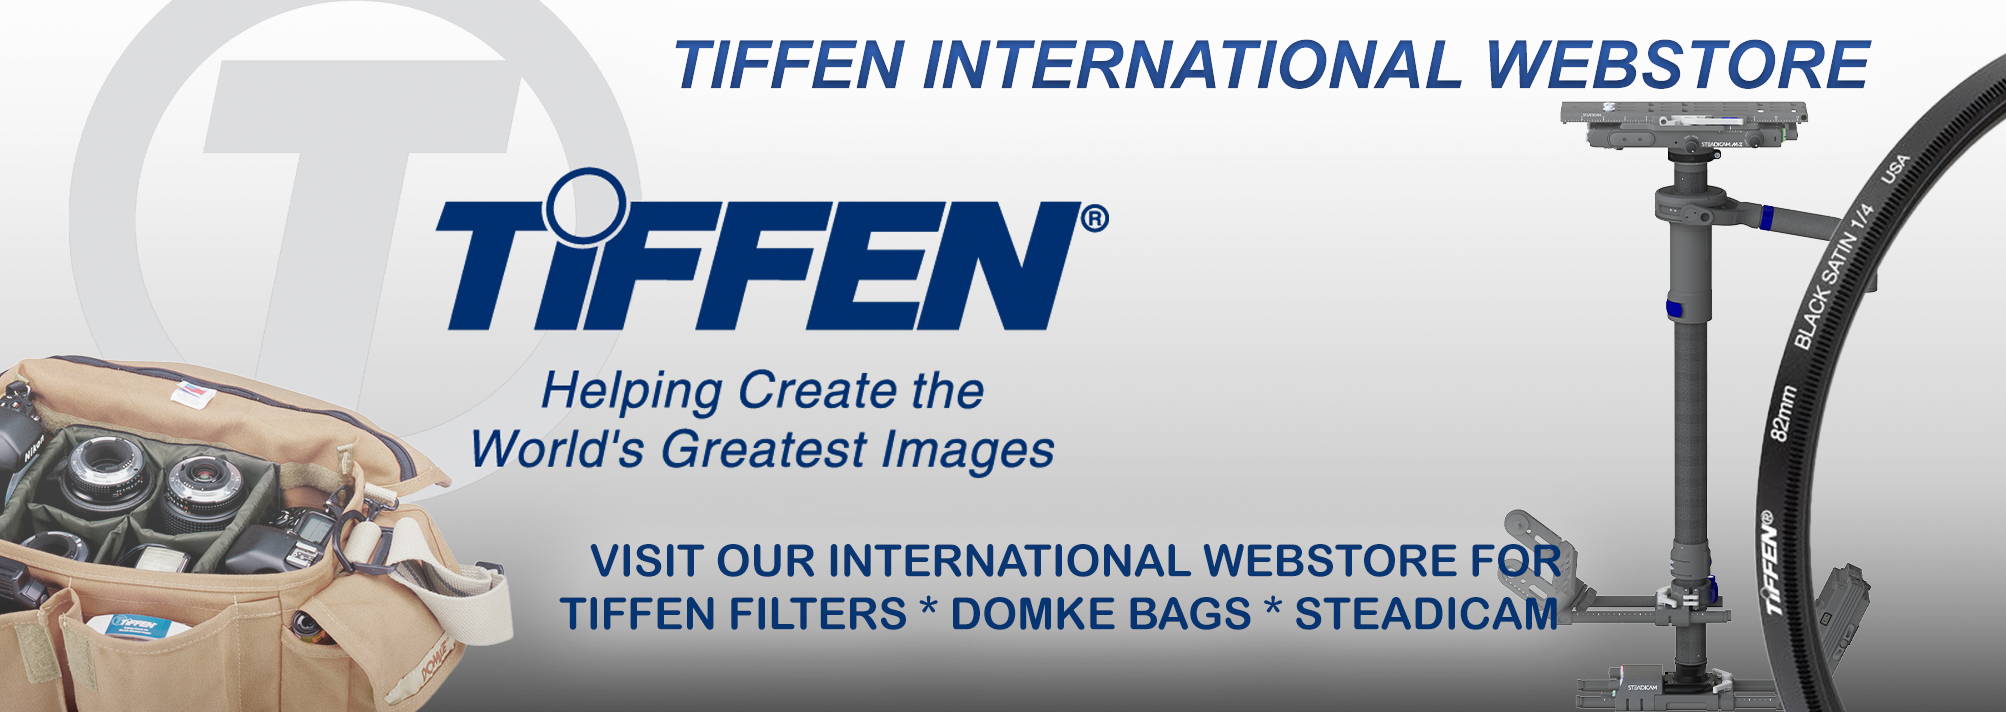 Tiffen International WebStore